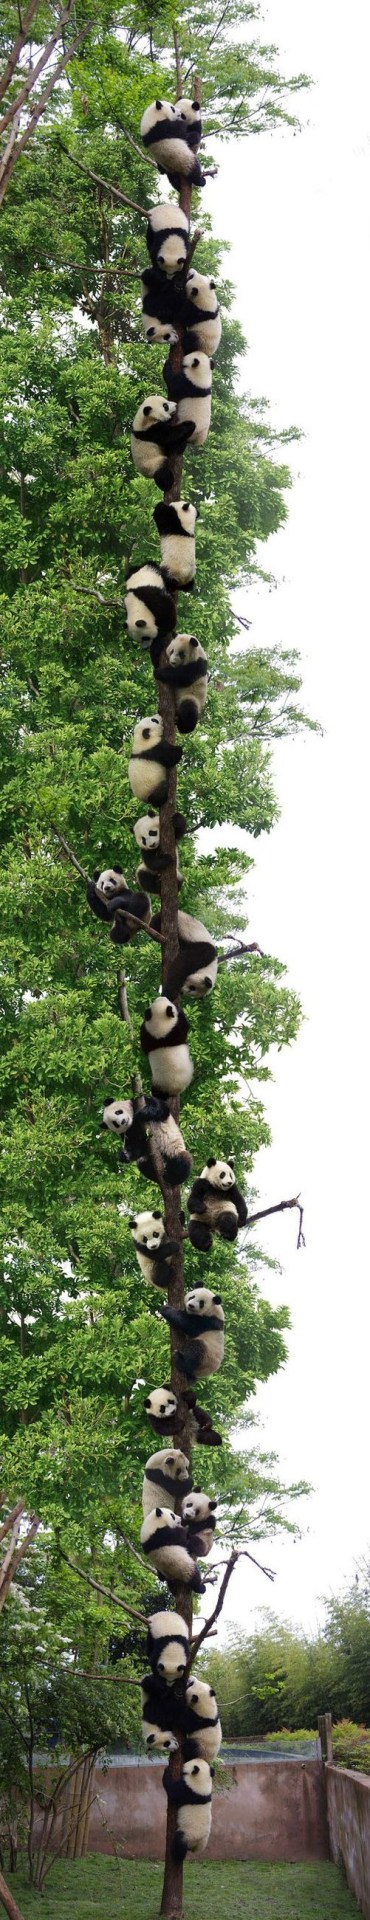 Pandas are playing.jpg